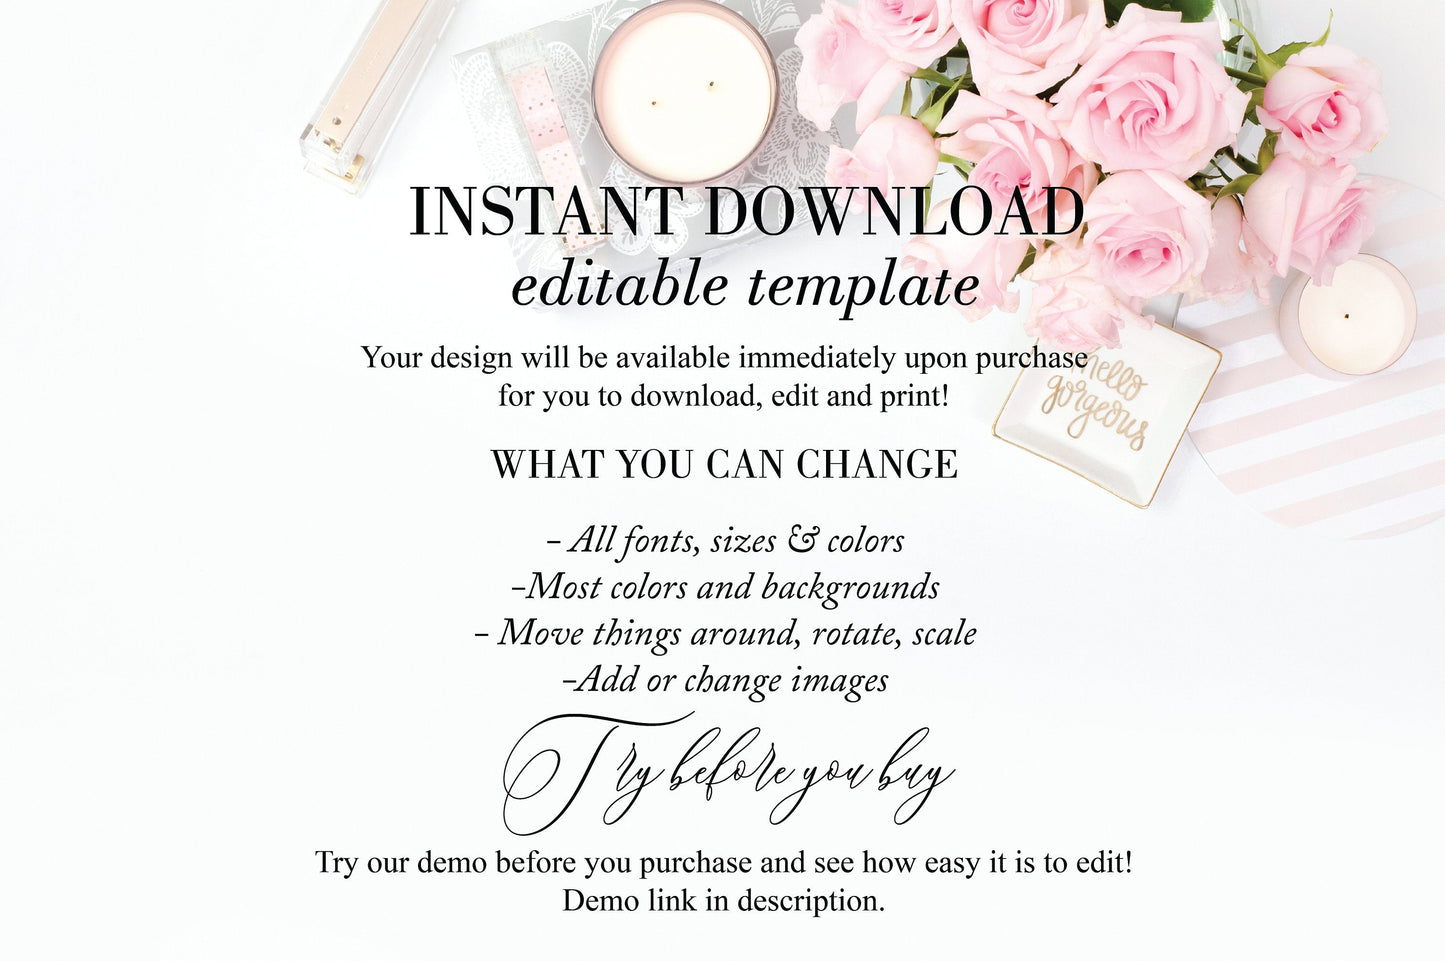 Minimalist Wedding Menu Printable Wedding Menu Template Printable Menu Card Instant Download Editable Templett - GAB MENU|PROGRAMS|TIMELINE SAVVY PAPER CO